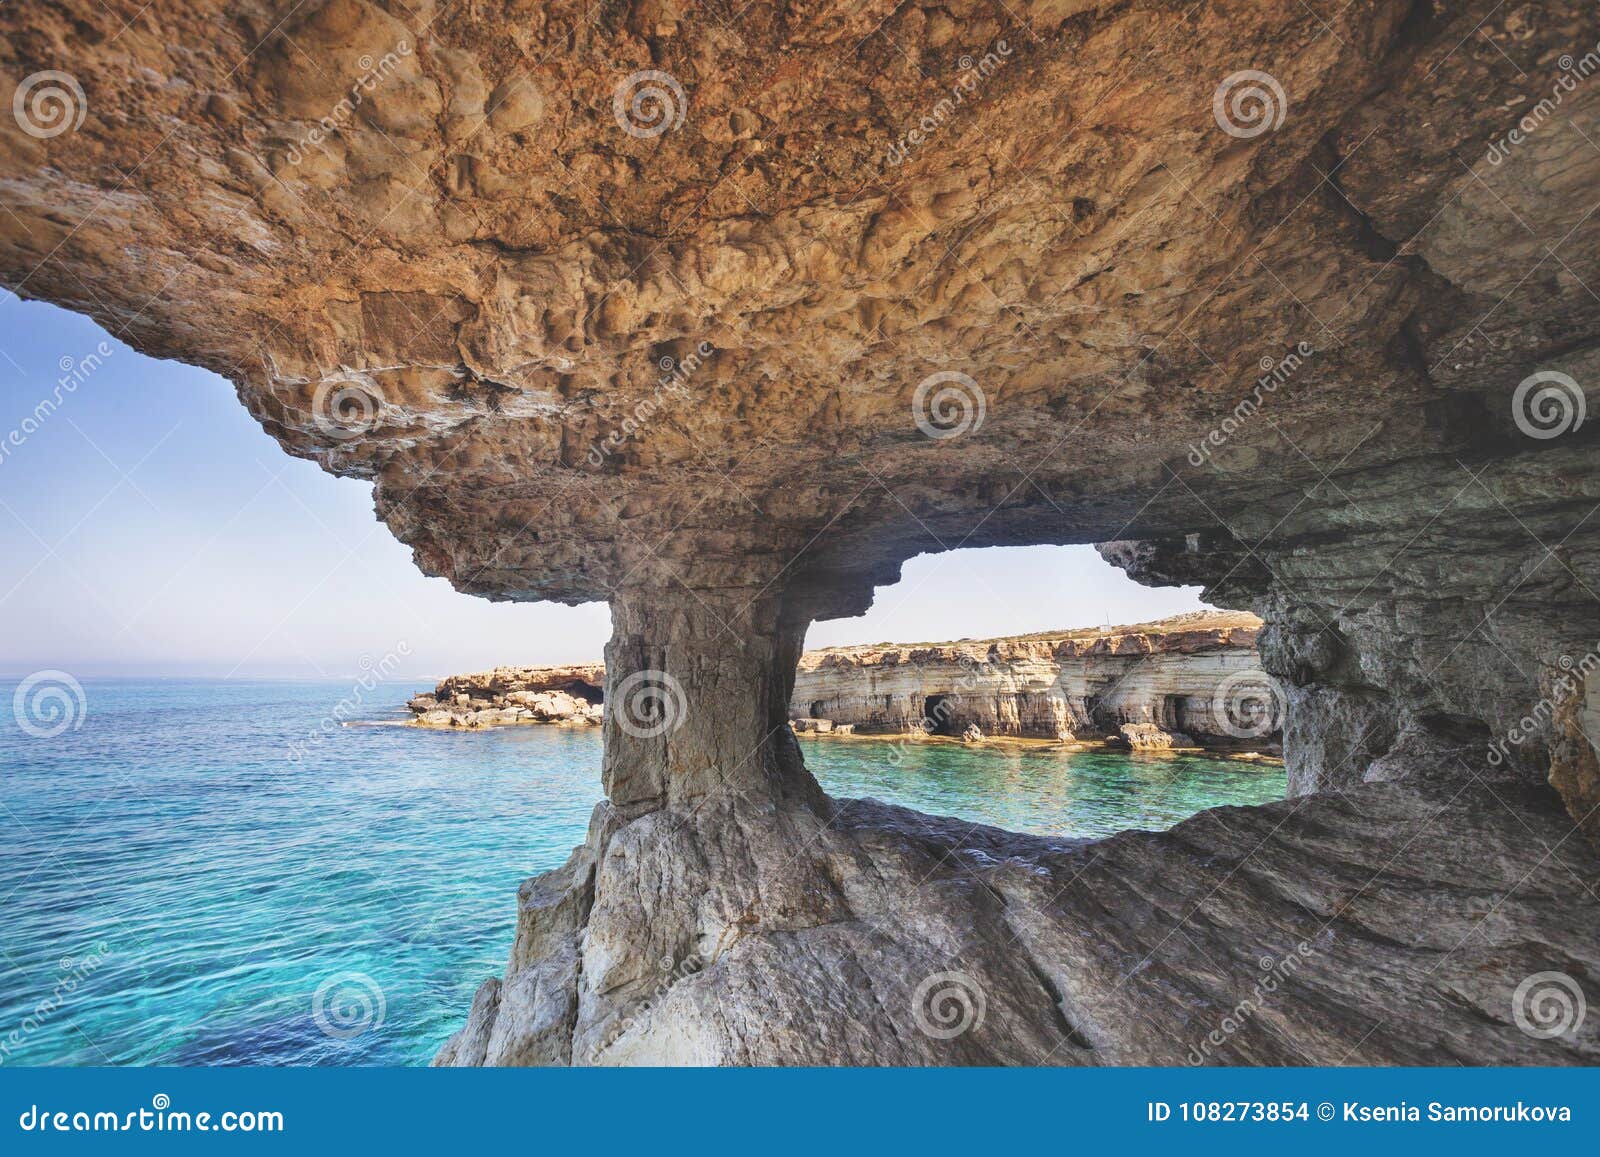 ayia napa, cyprus. sea caves of cavo greco cape.